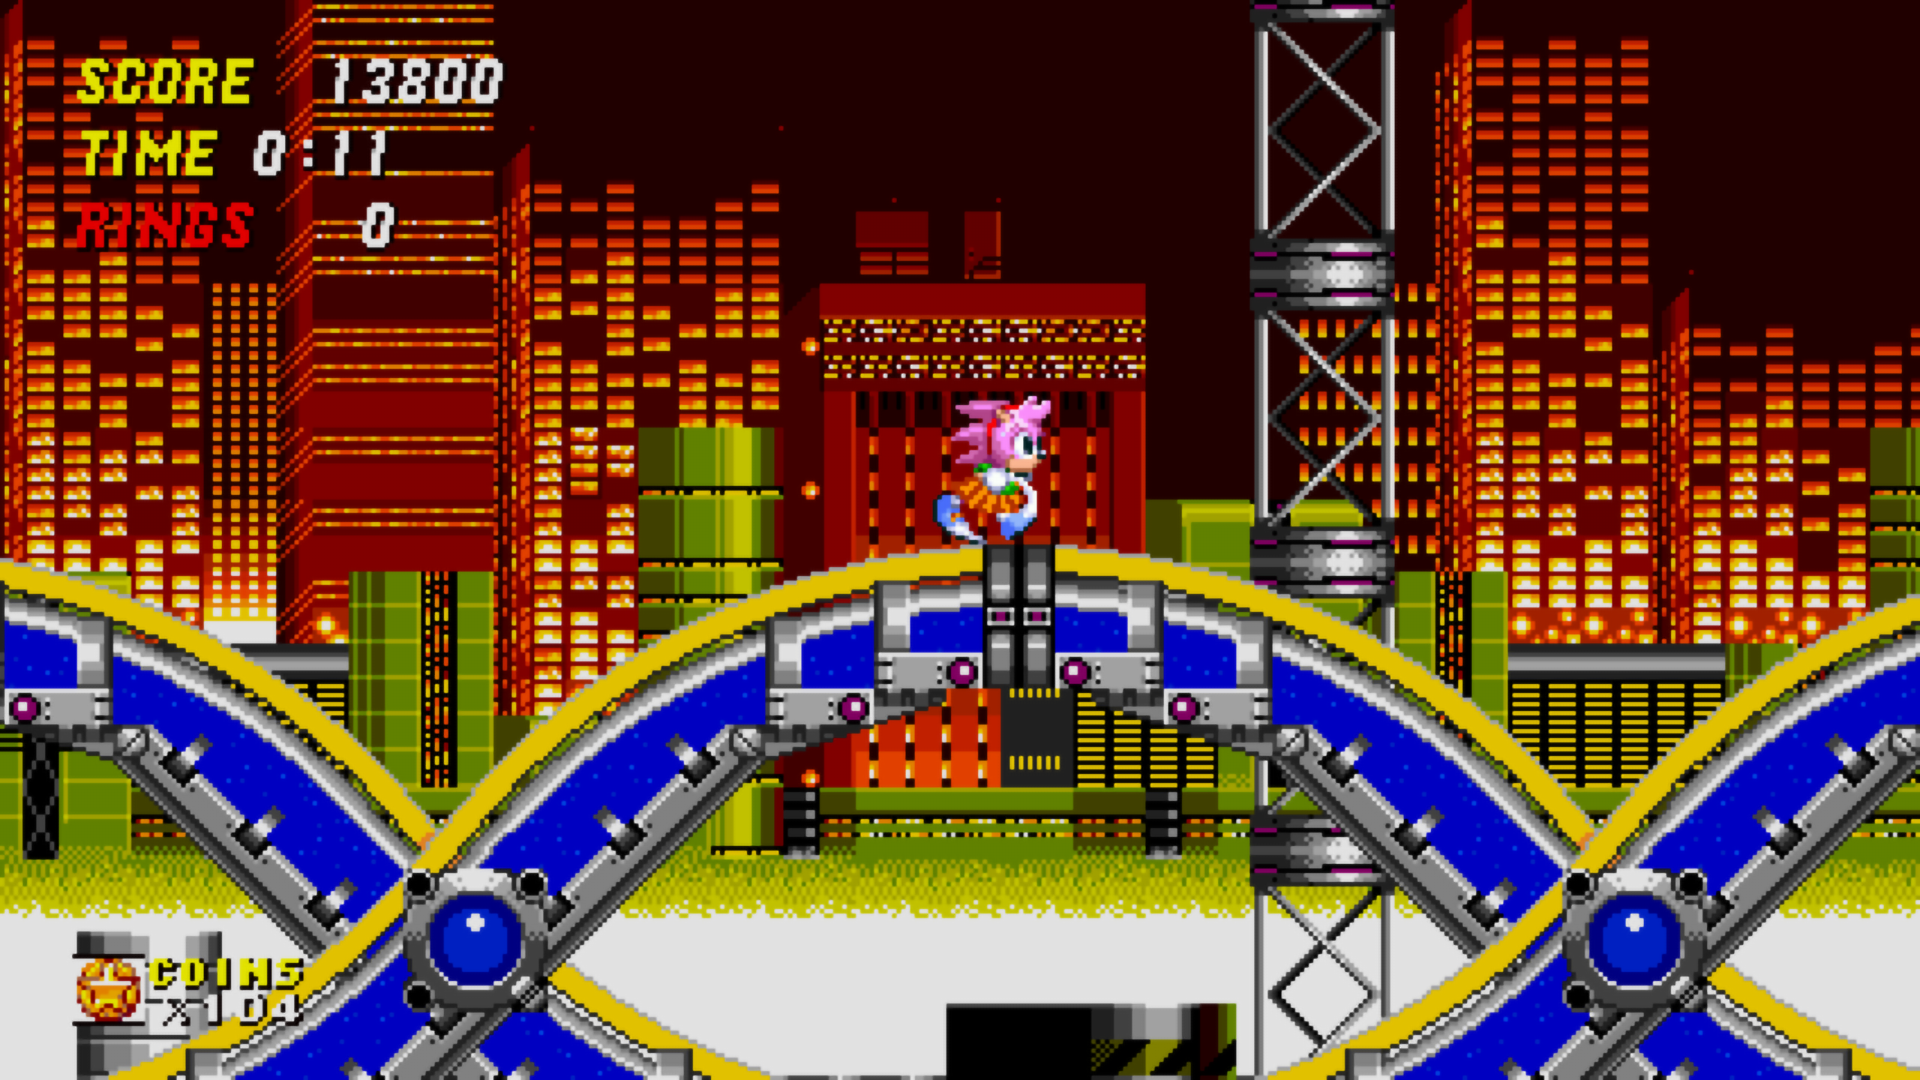 Finally playing Master System sonic 2 : r/SonicTheHedgehog